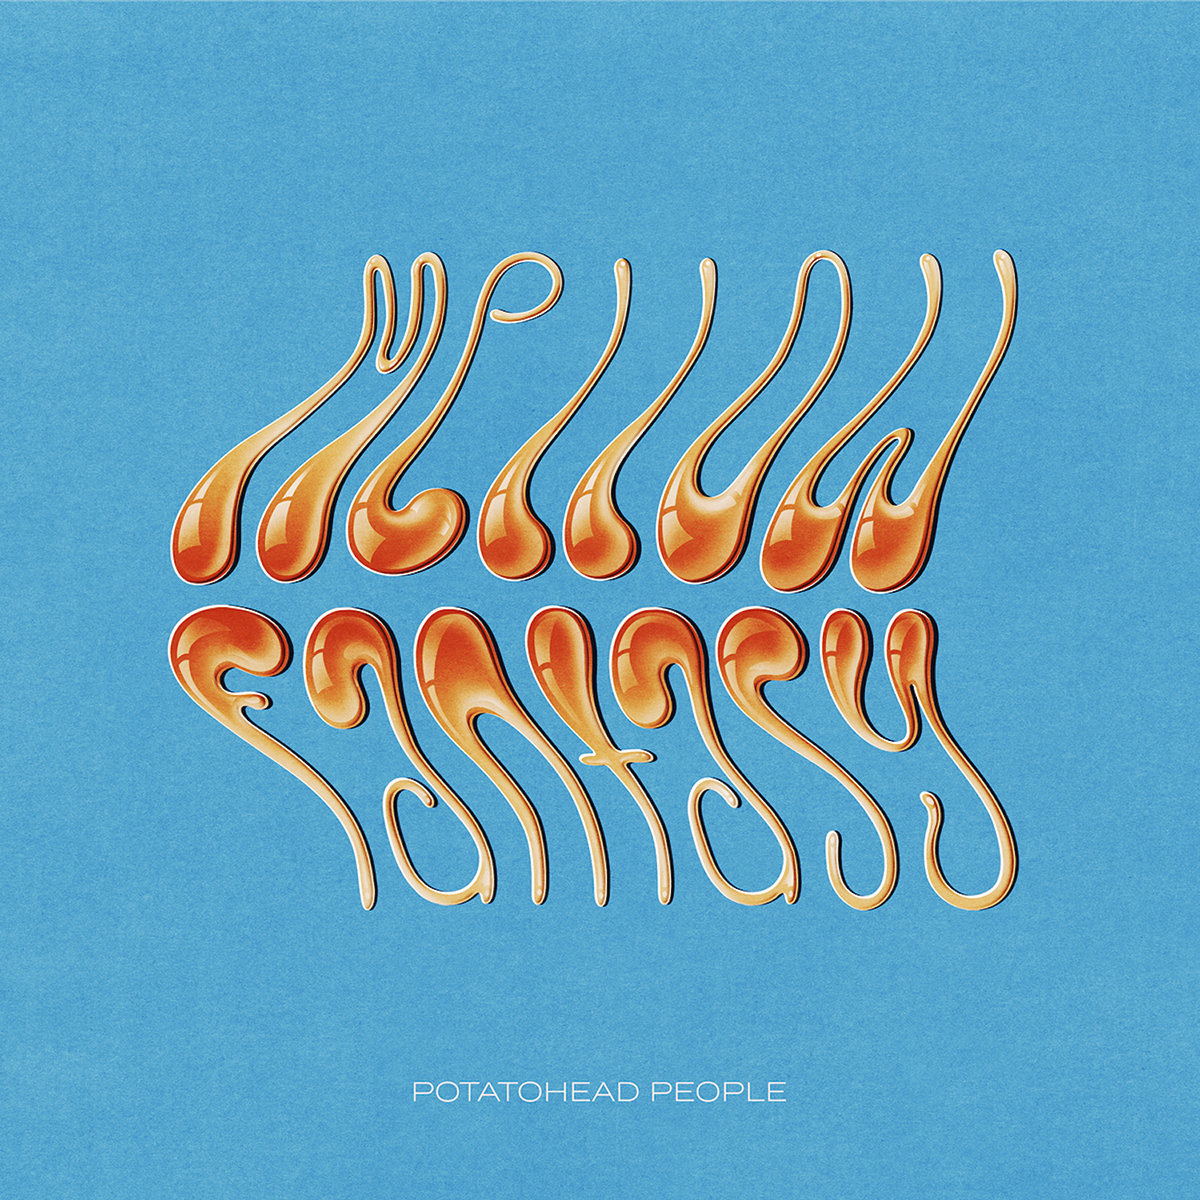 Potatohead People return with new album "Mellow Fantasy"